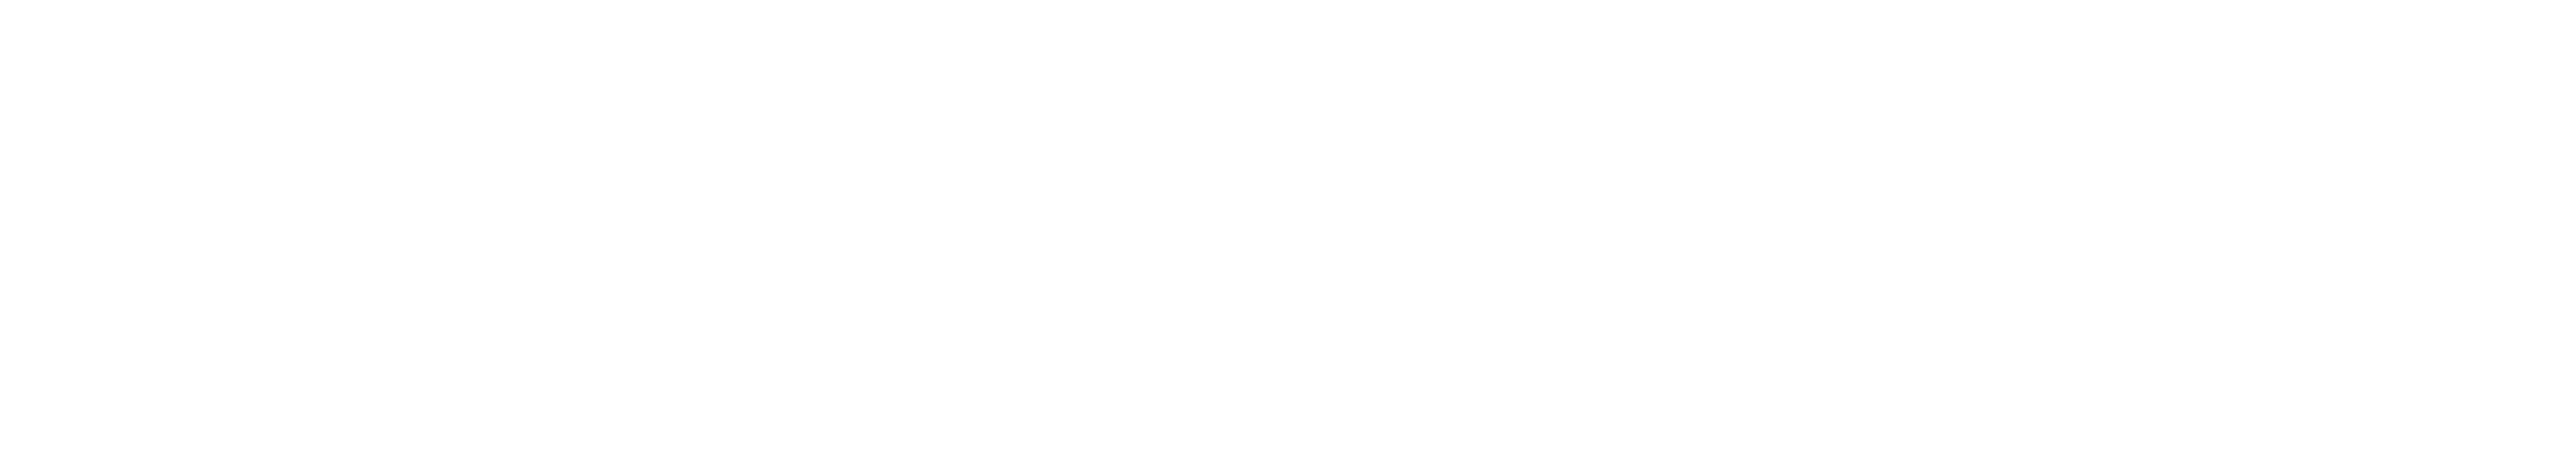 MCM Law Group PC